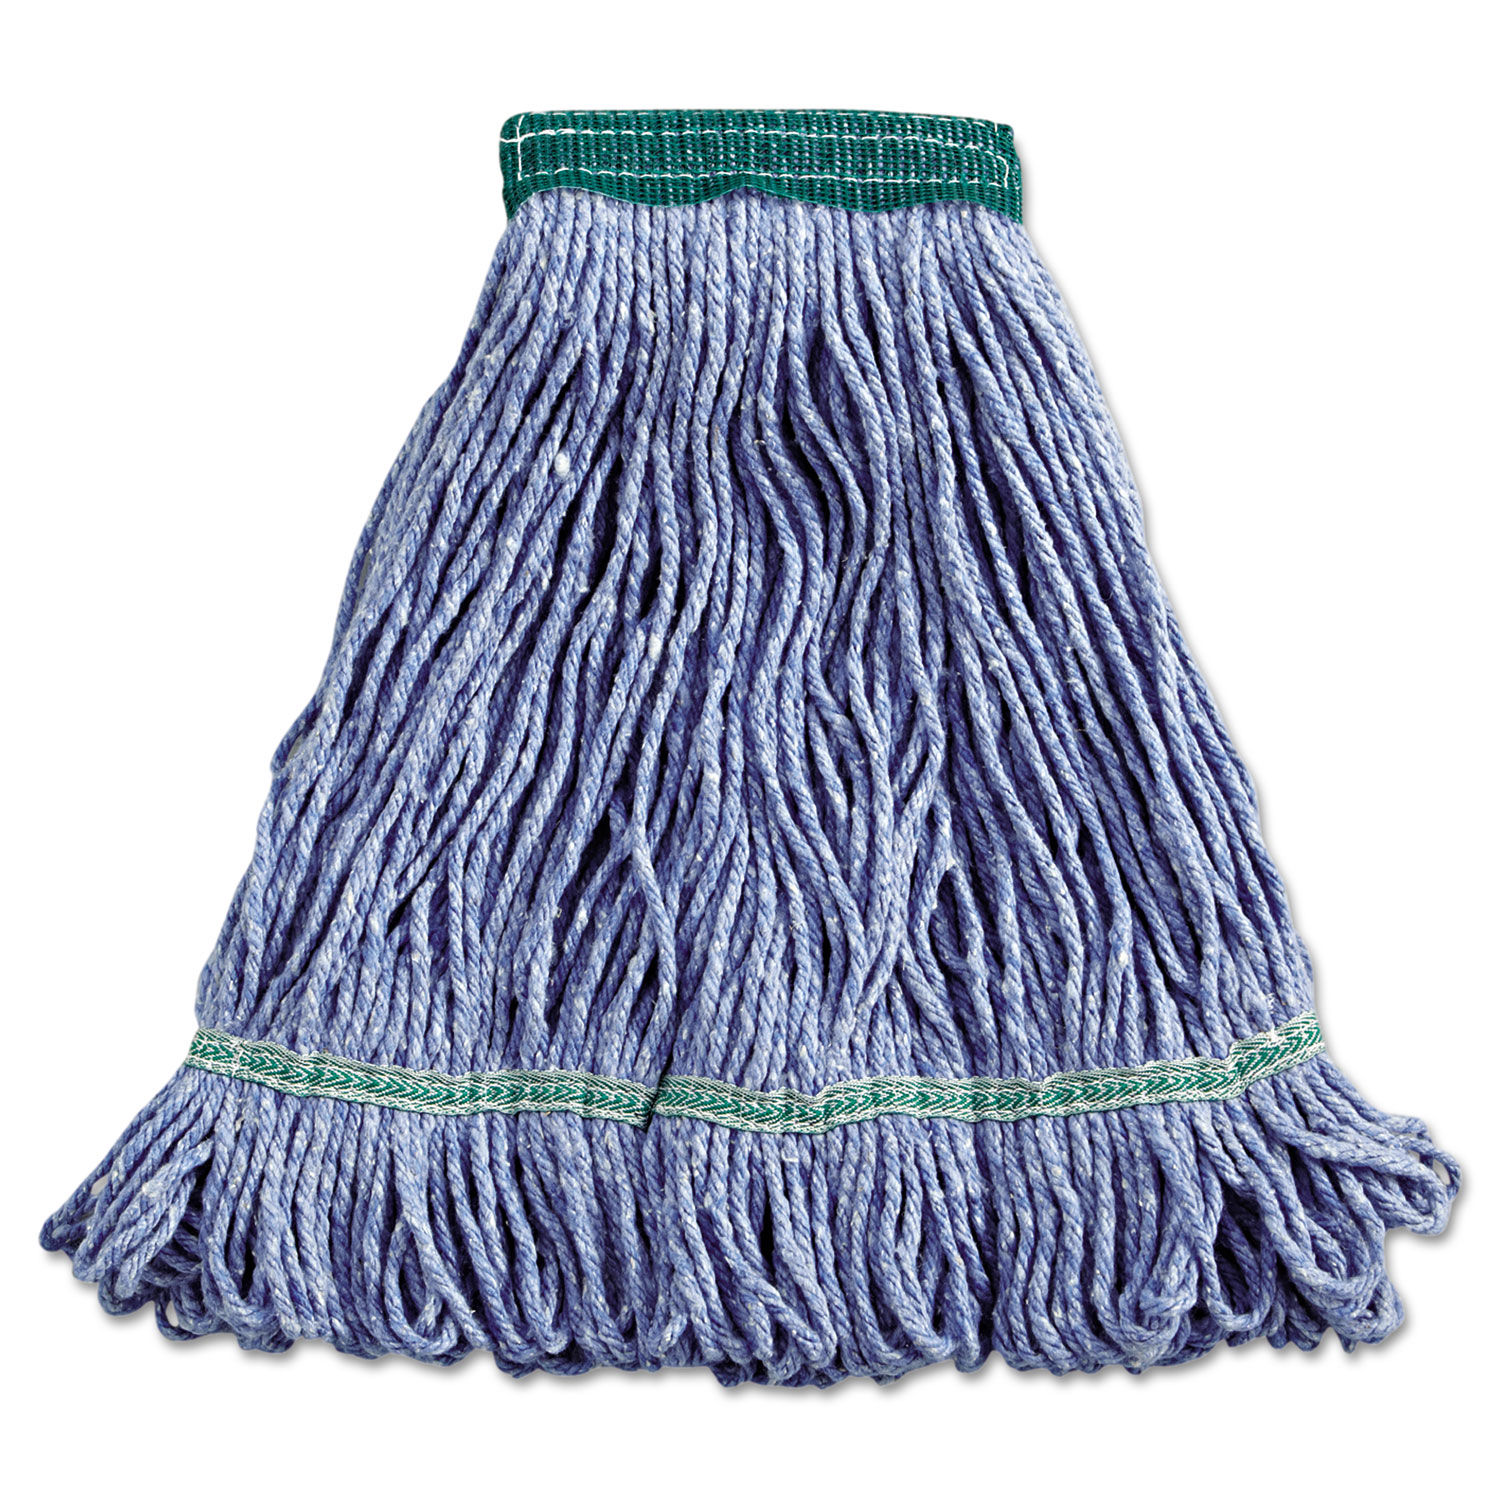 Super Loop Wet Mop Head Cotton/Synthetic Fiber, 5" Headband, Medium Size, Blue